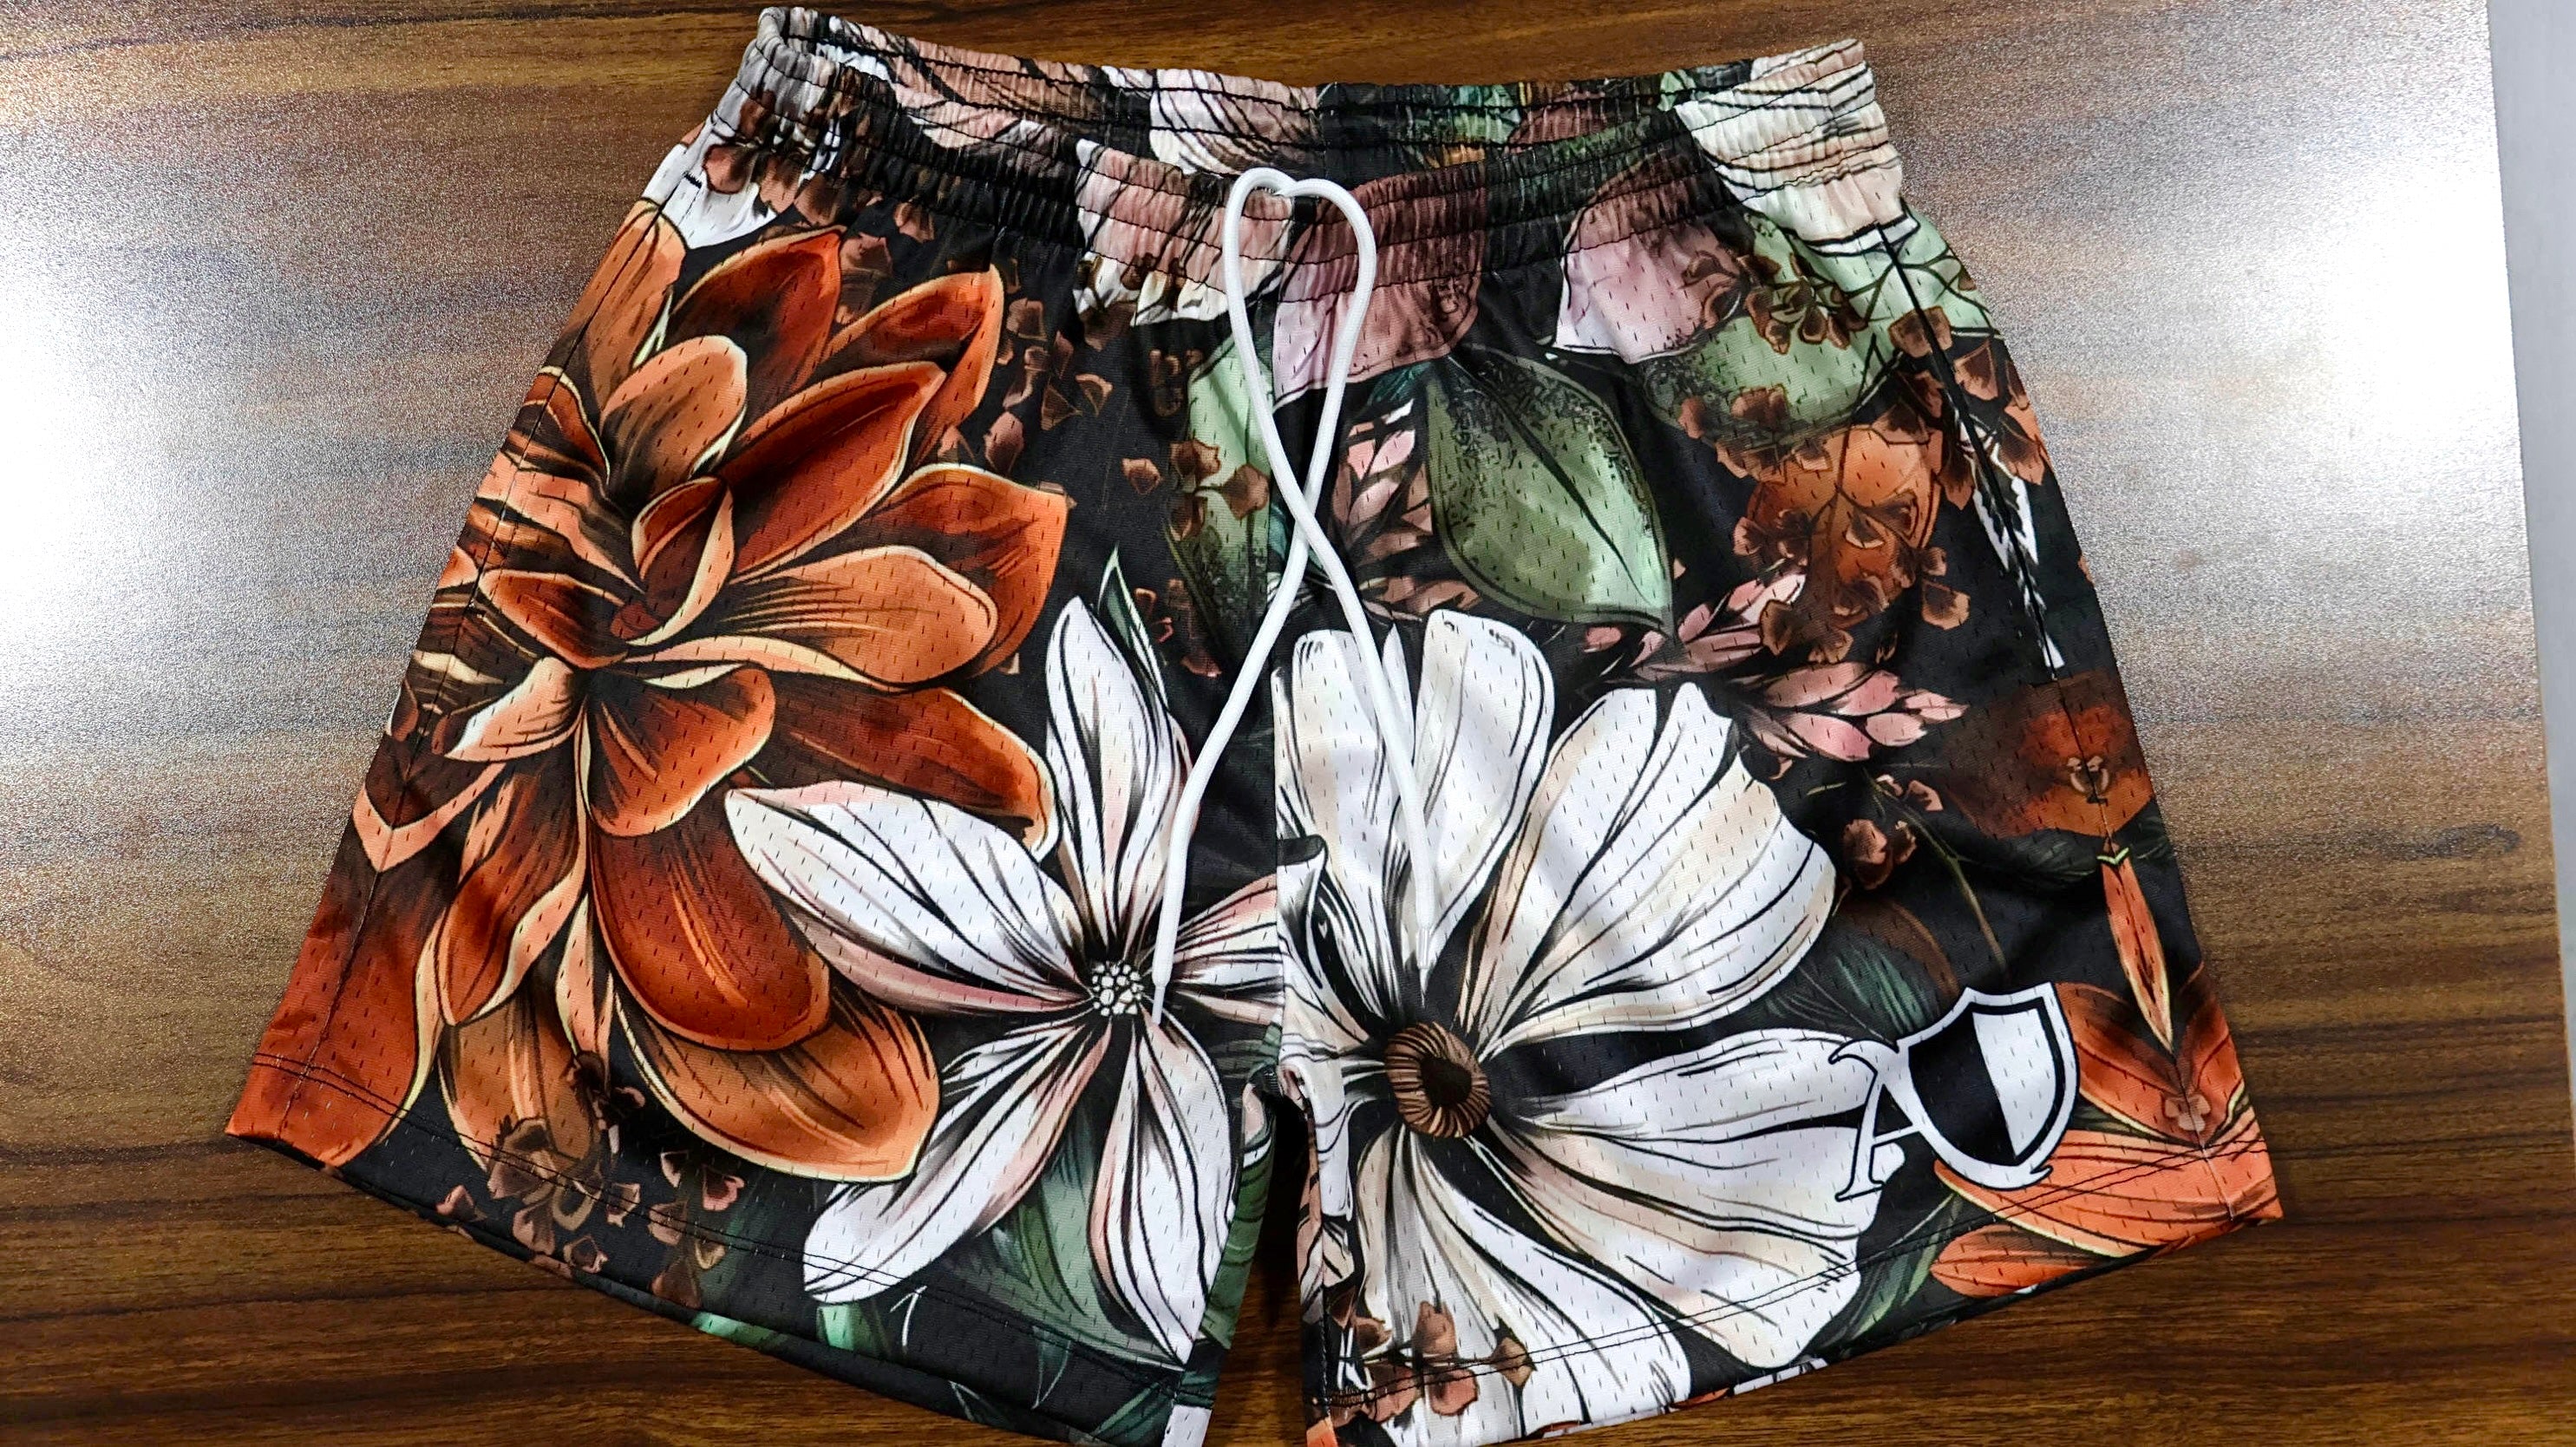 Floral shorts – AlbarranClothing